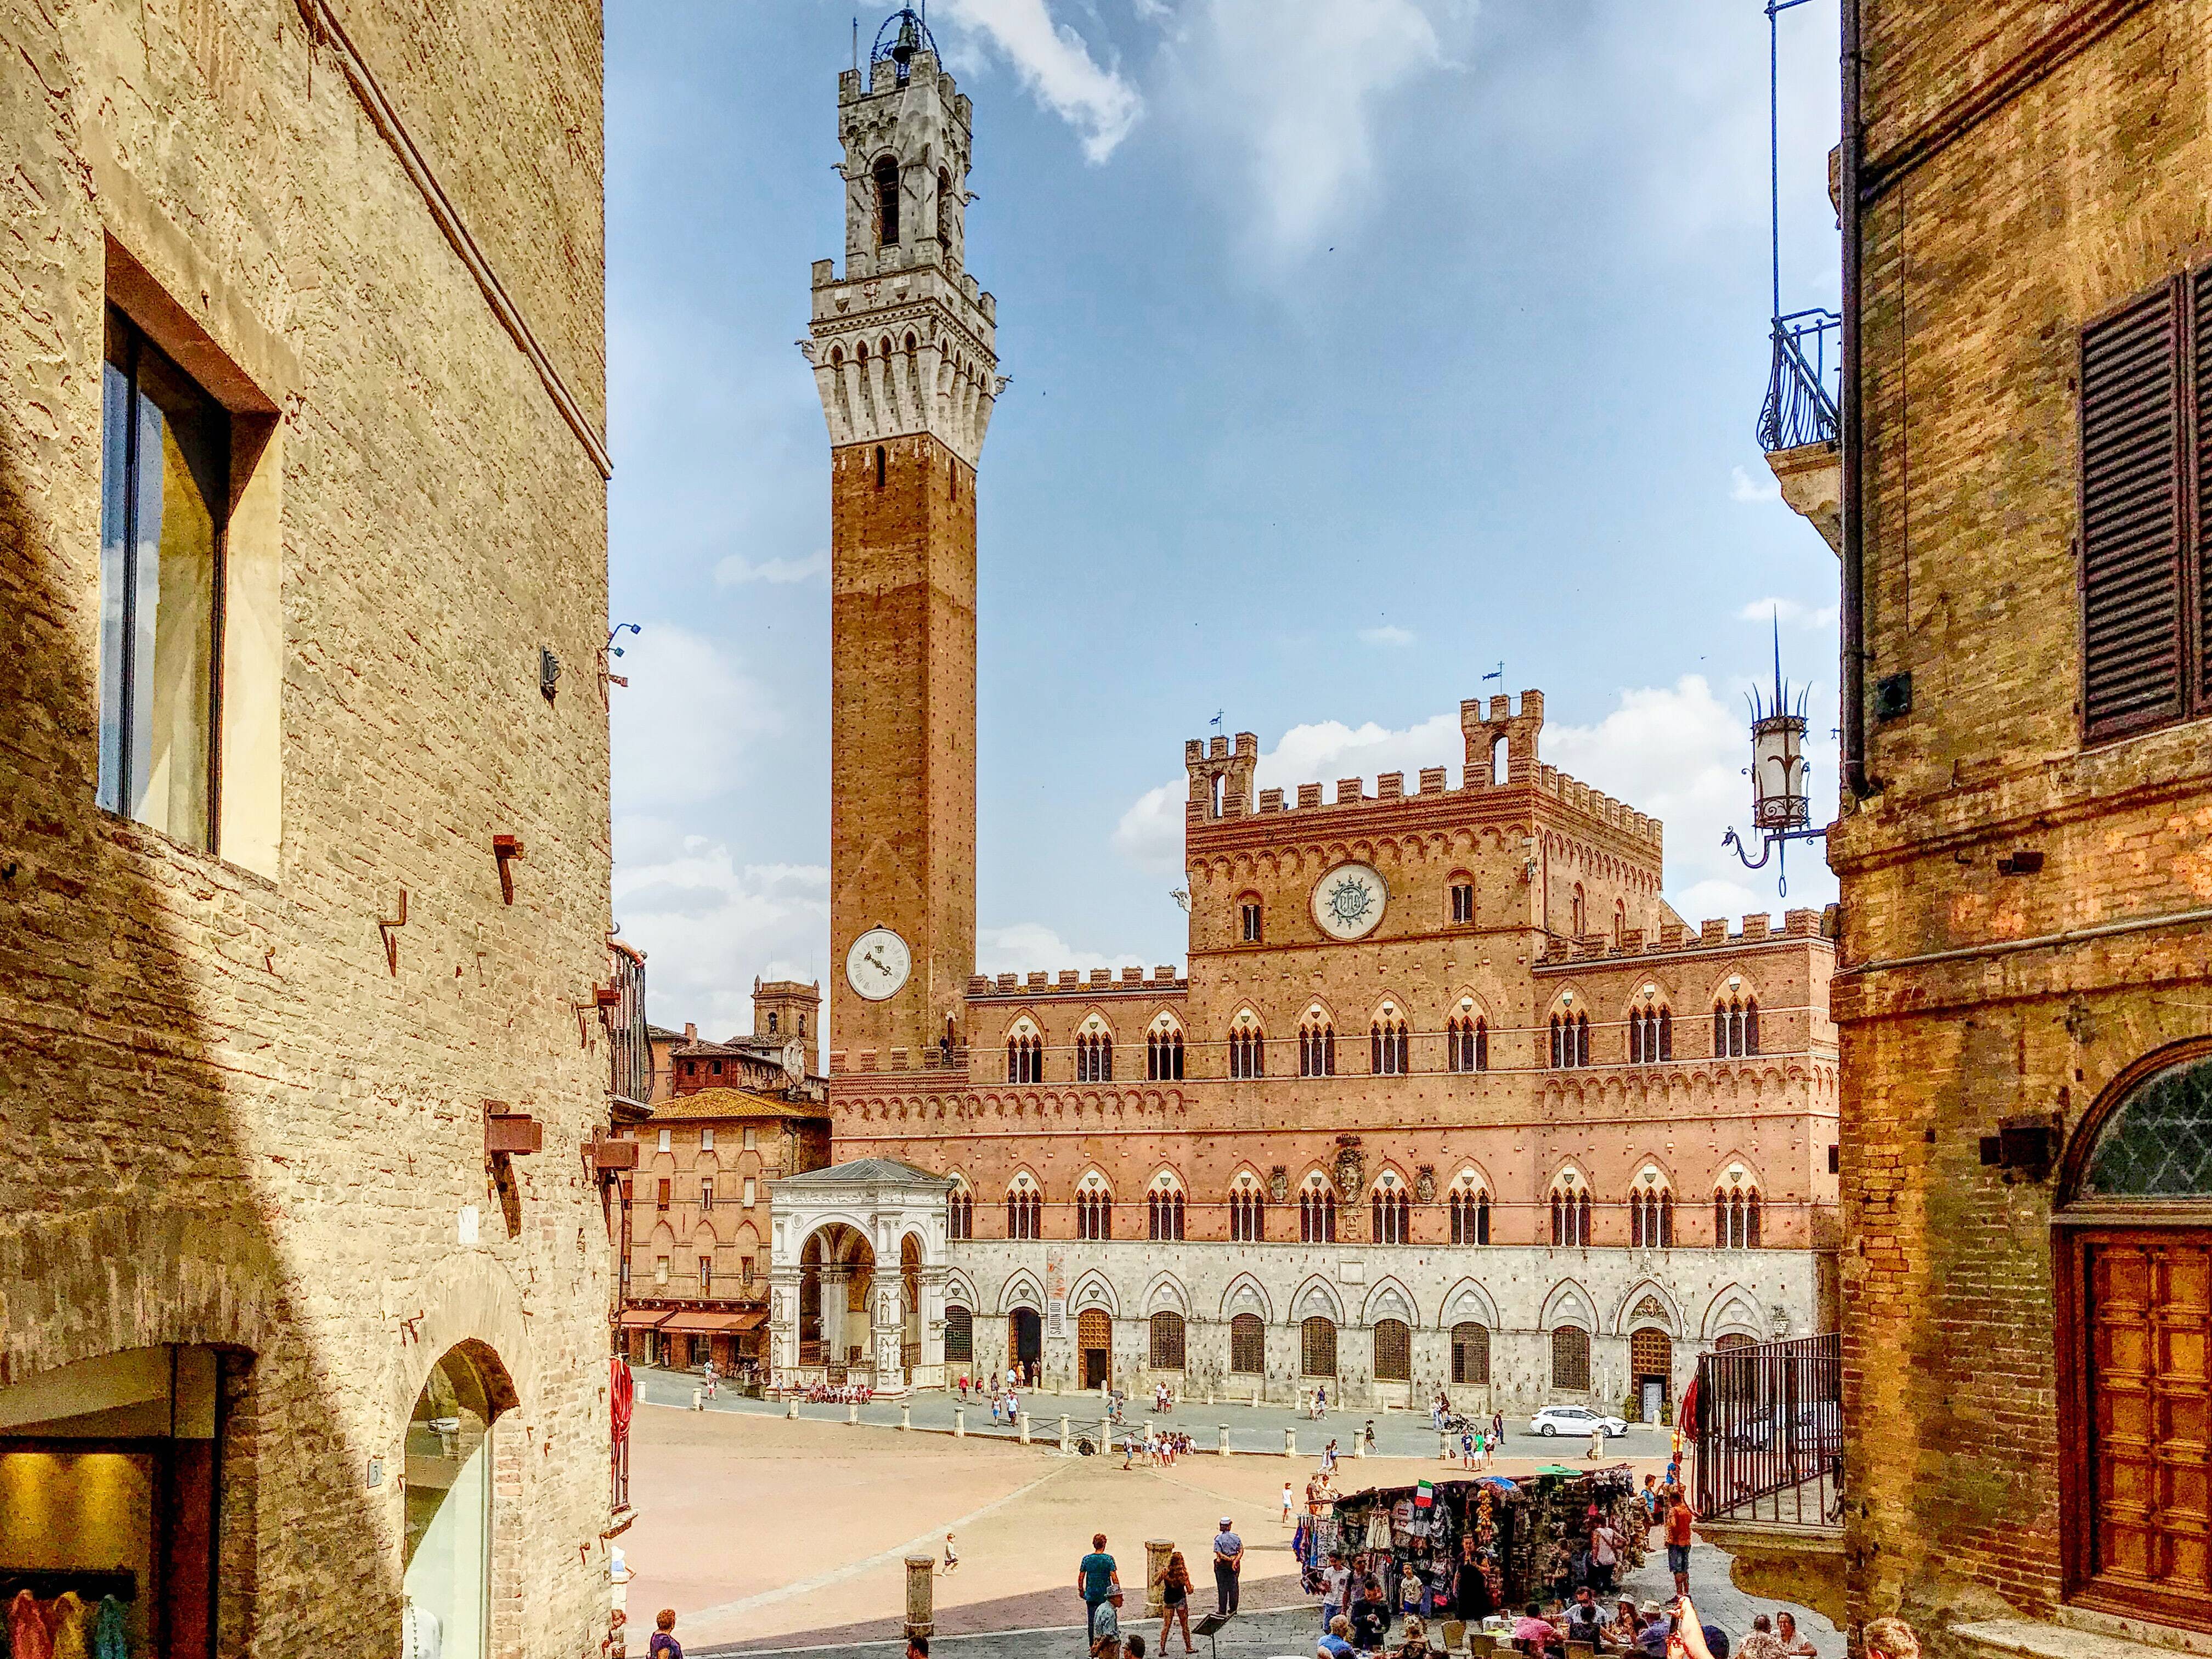 Siena conta com diversas construções históricas medievais. Foto: Antonio Ristallo / Unsplash